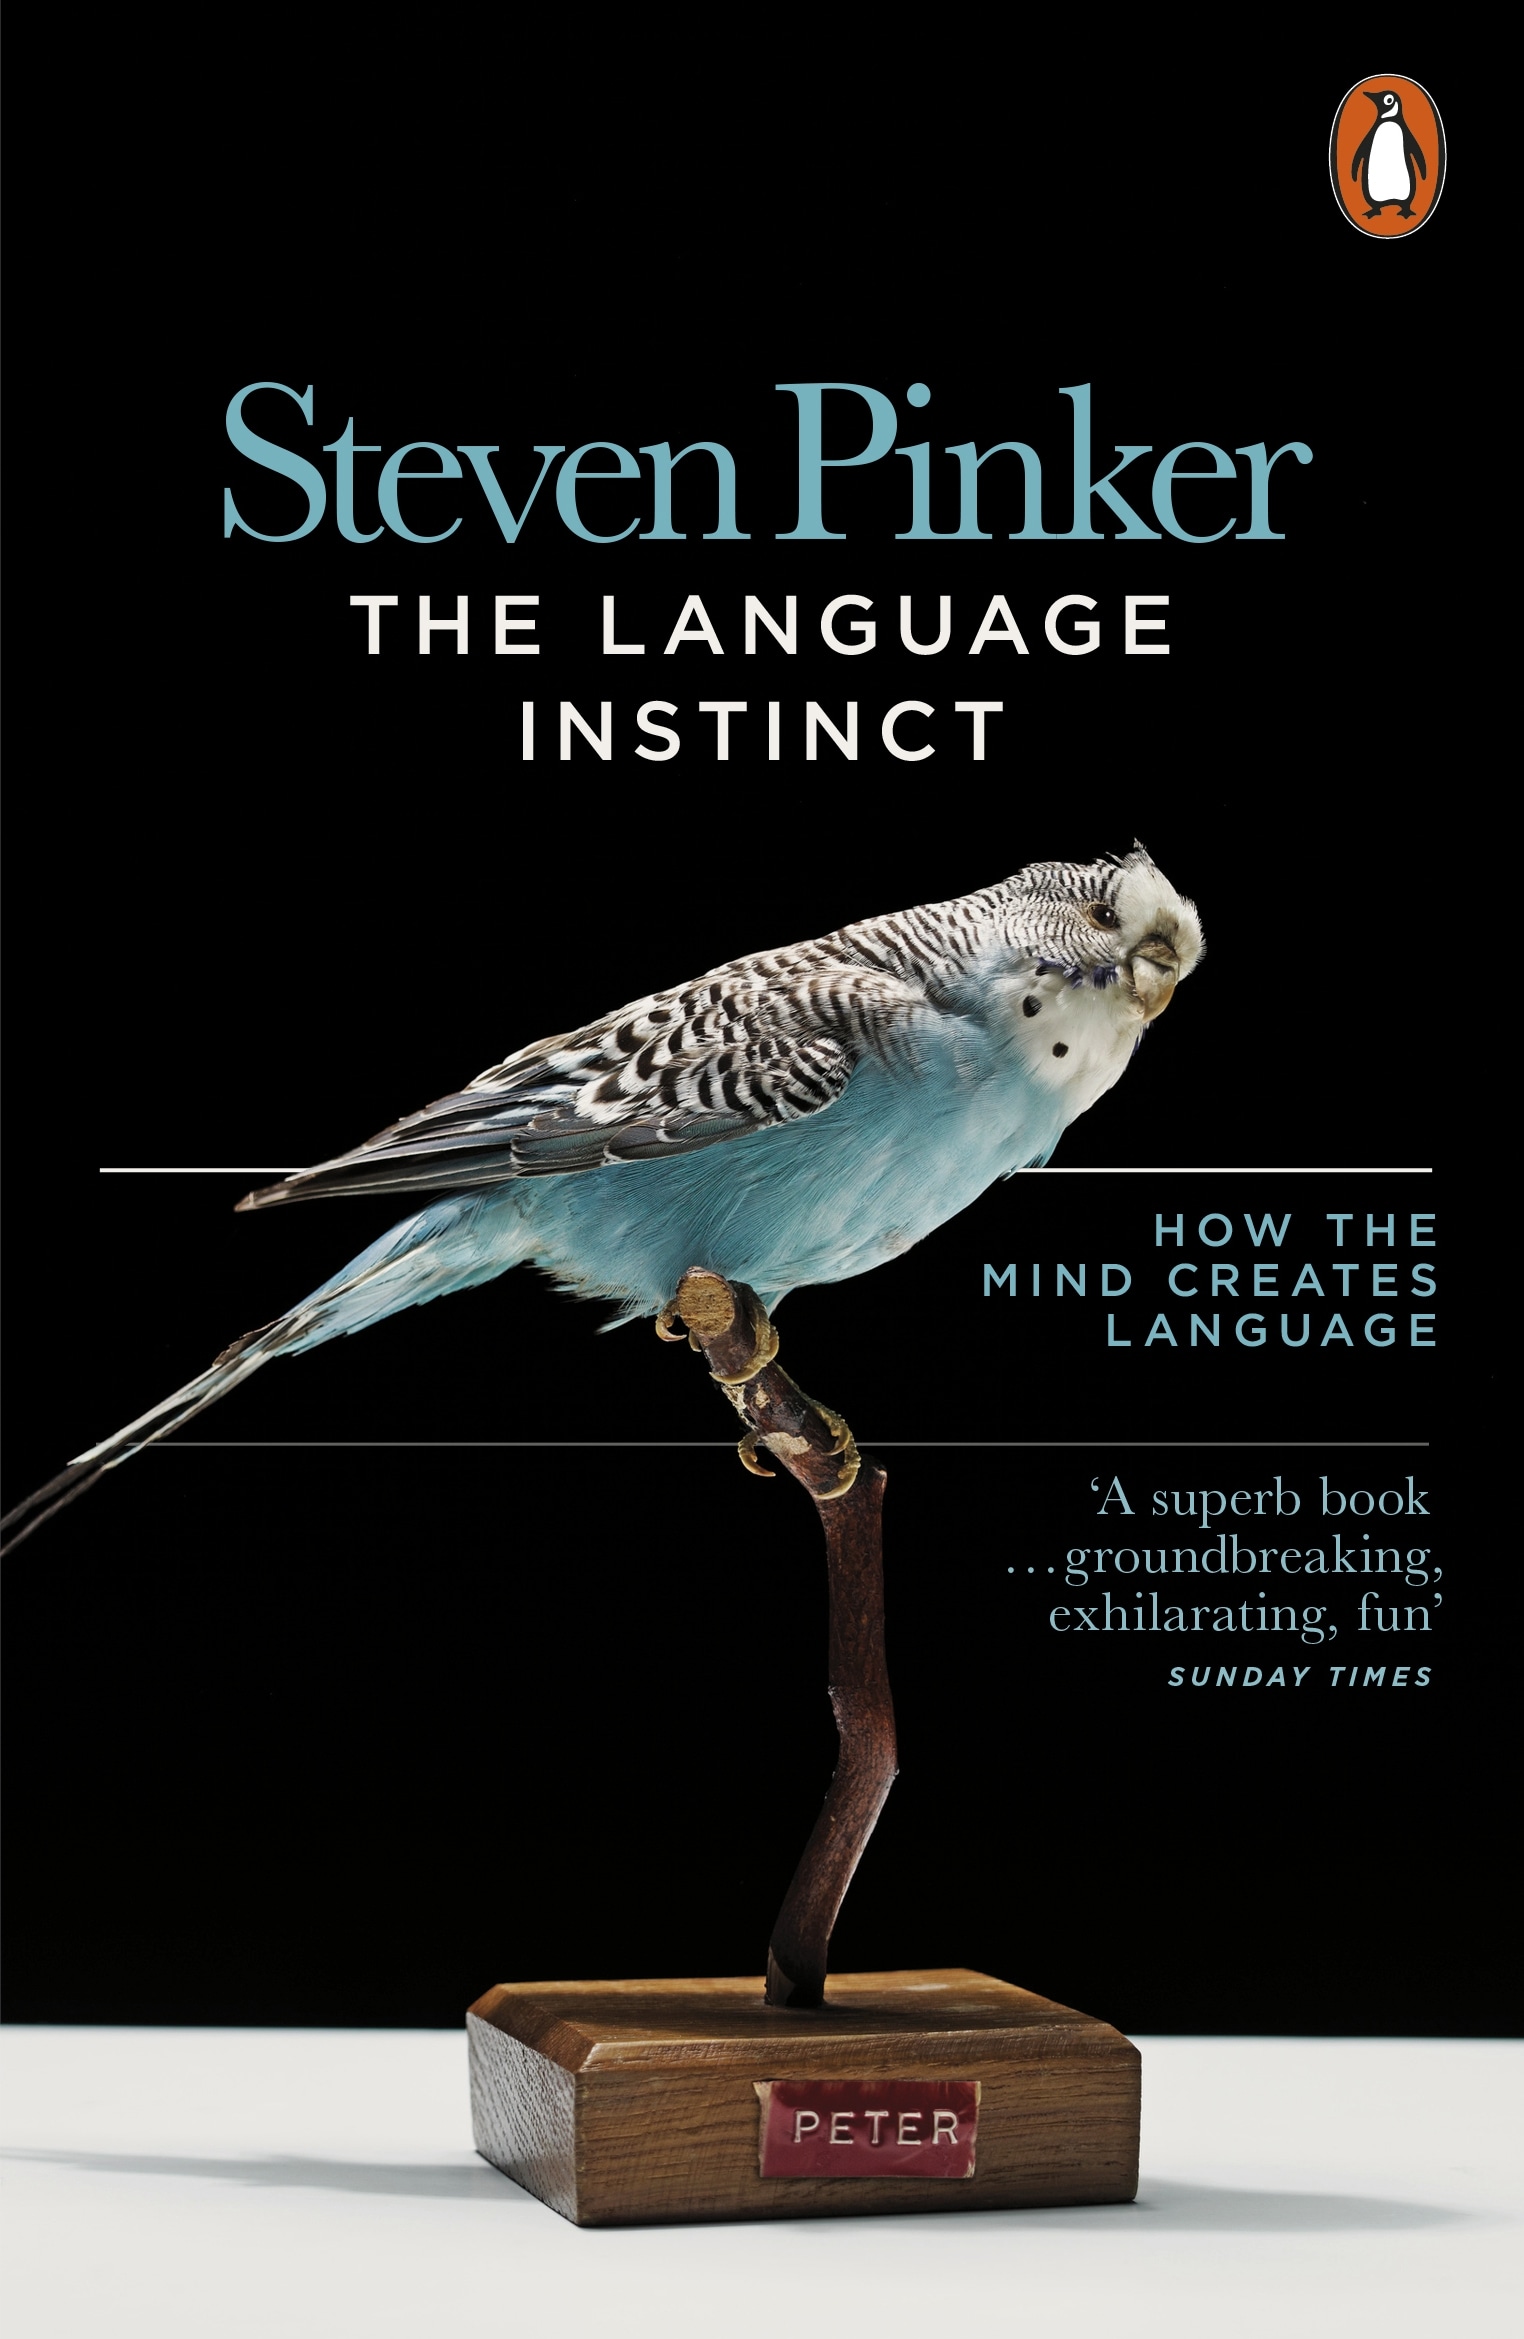 Book “The Language Instinct” by Steven Pinker — April 2, 2015